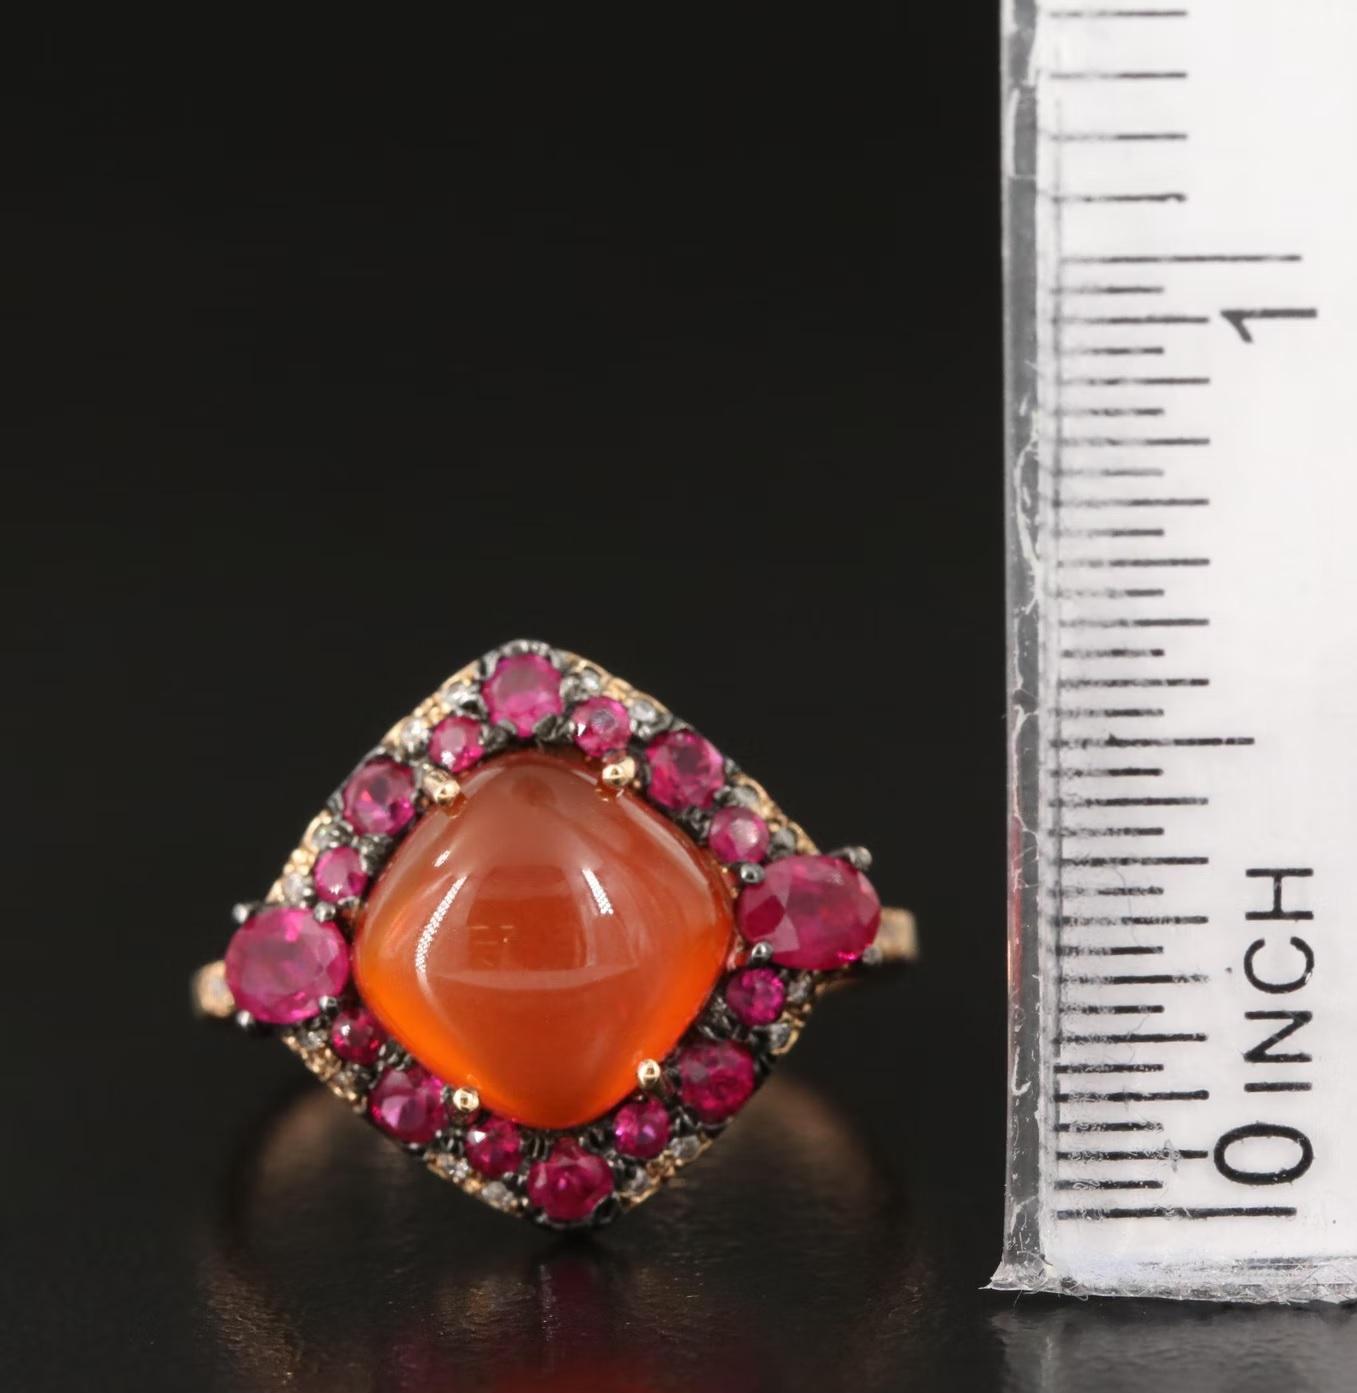 Round Cut $4950 / International Diamond Jewelry Designer Diamond Gemstone Ring / 18K Gold For Sale